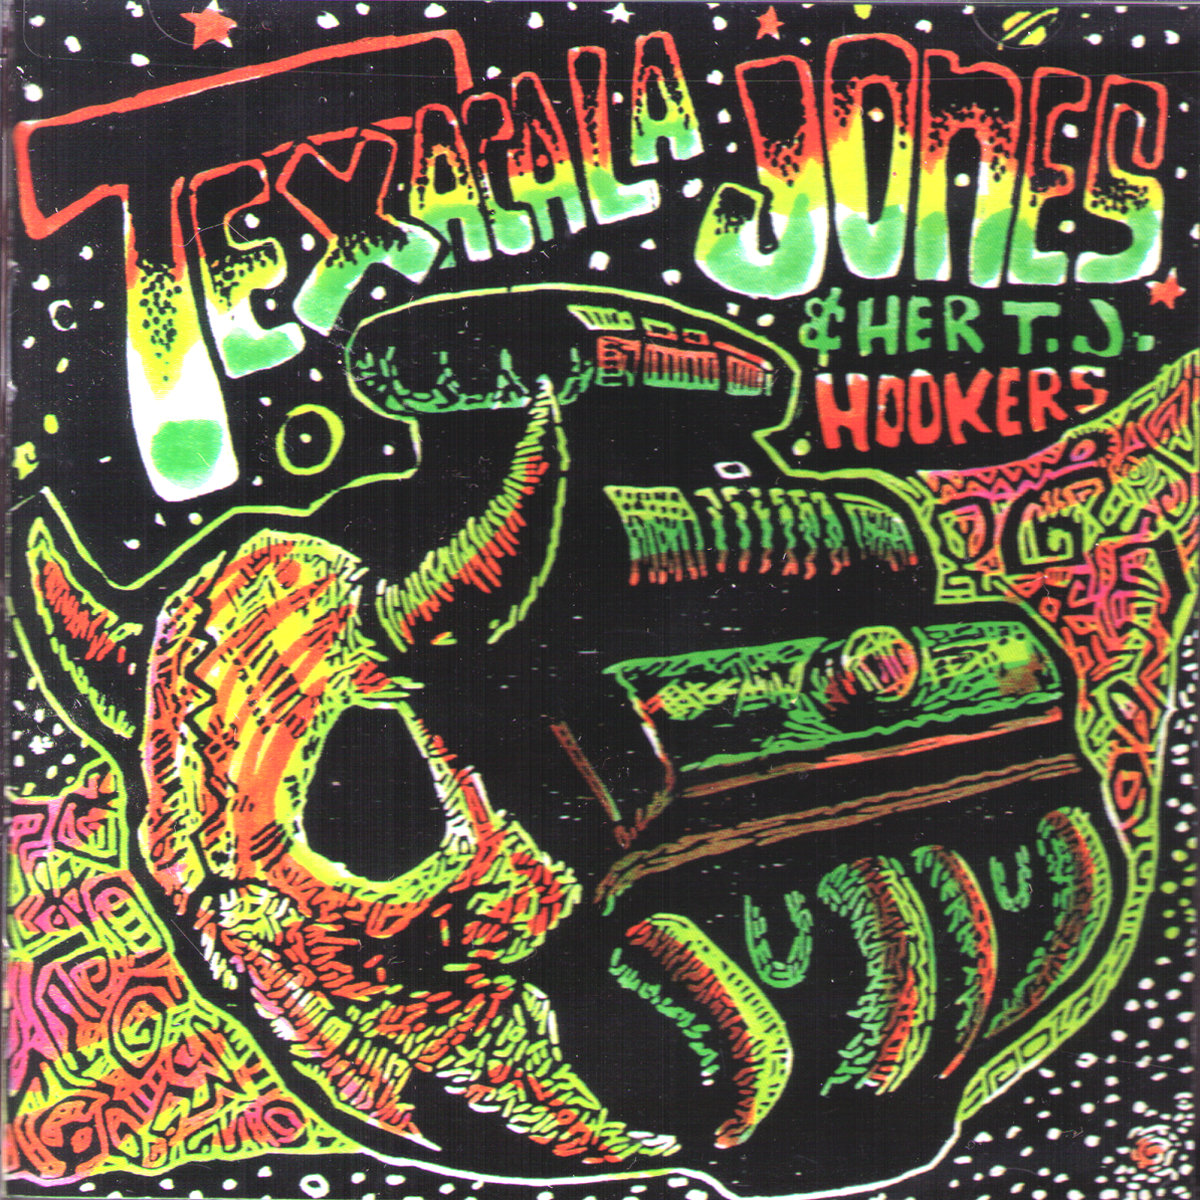 Texacala Jones & Her TJ Hookers- S/T CD ~EX TEX & THE HORSEHEADS!